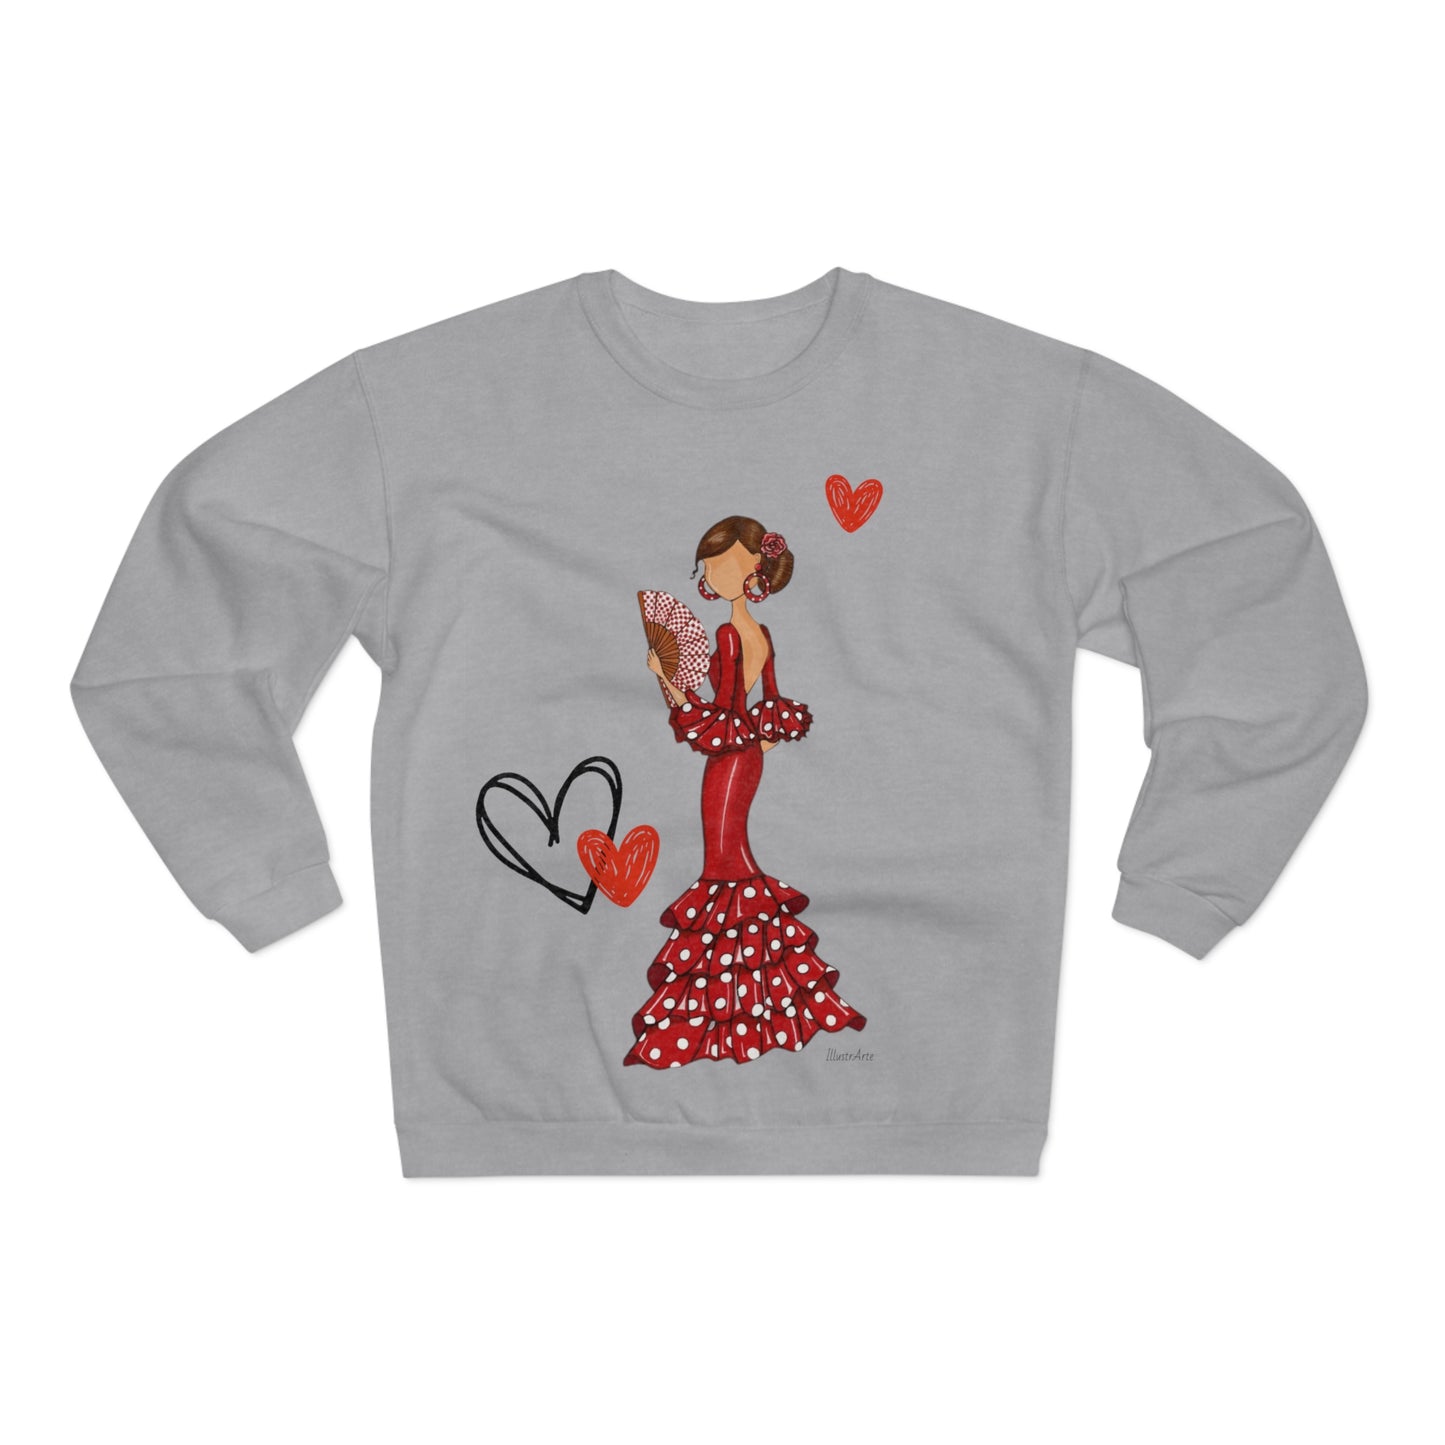 a women's sweatshirt with a woman in a polka dot dress holding a heart